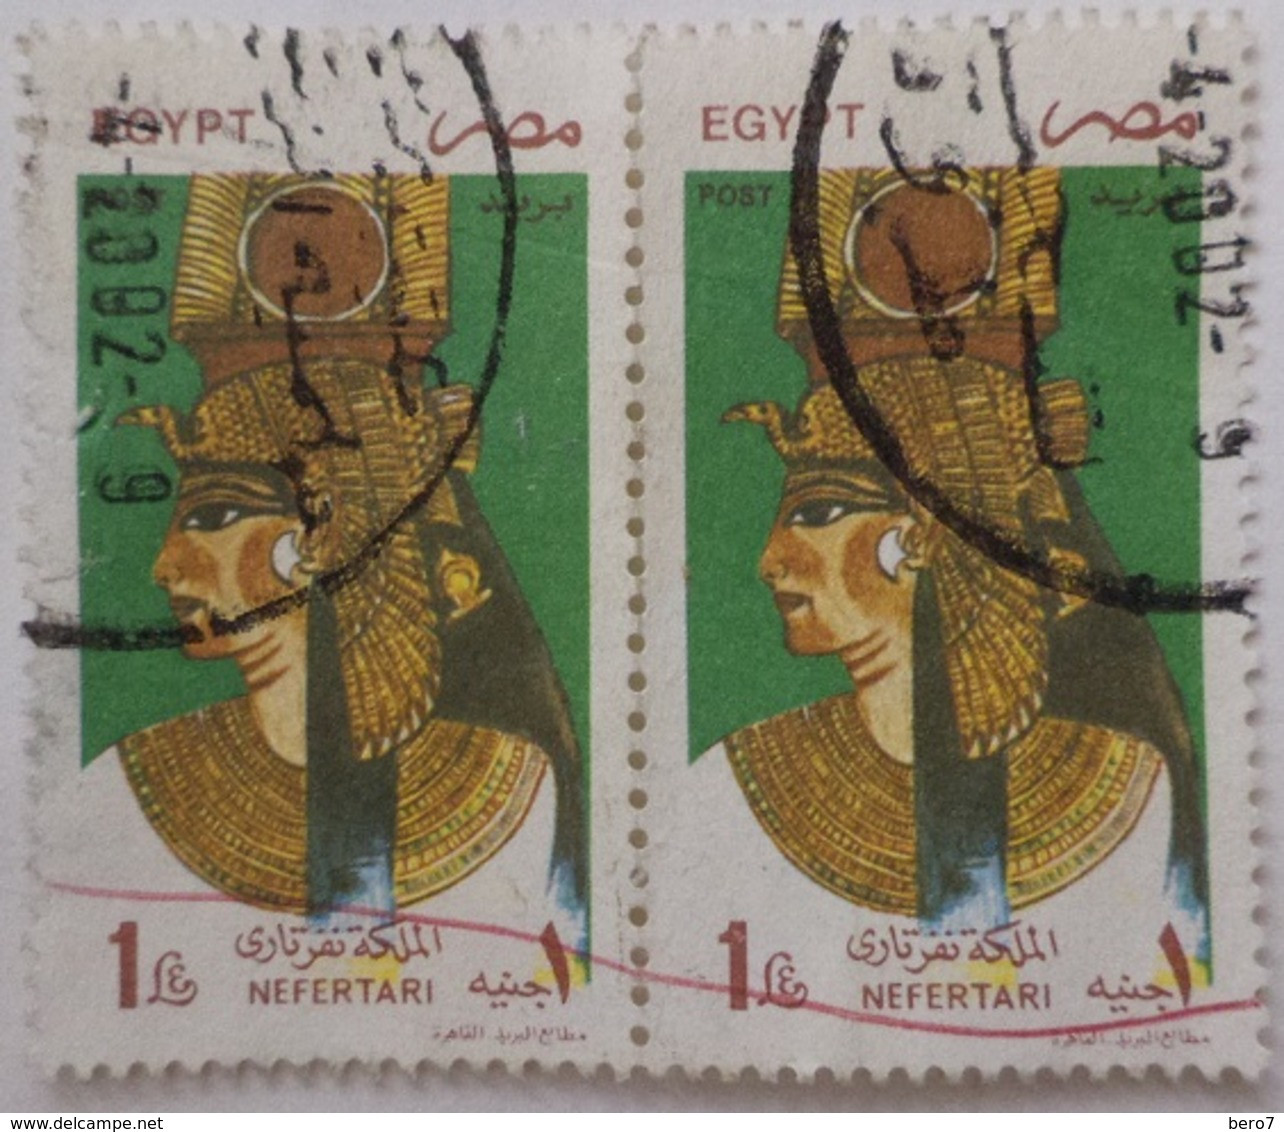 EGYPT - 1997- Queen Nefertai Wife Of Ramses II-  (Egypte) (Egitto) (Ägypten) (Egipto) (Egypten) - Oblitérés